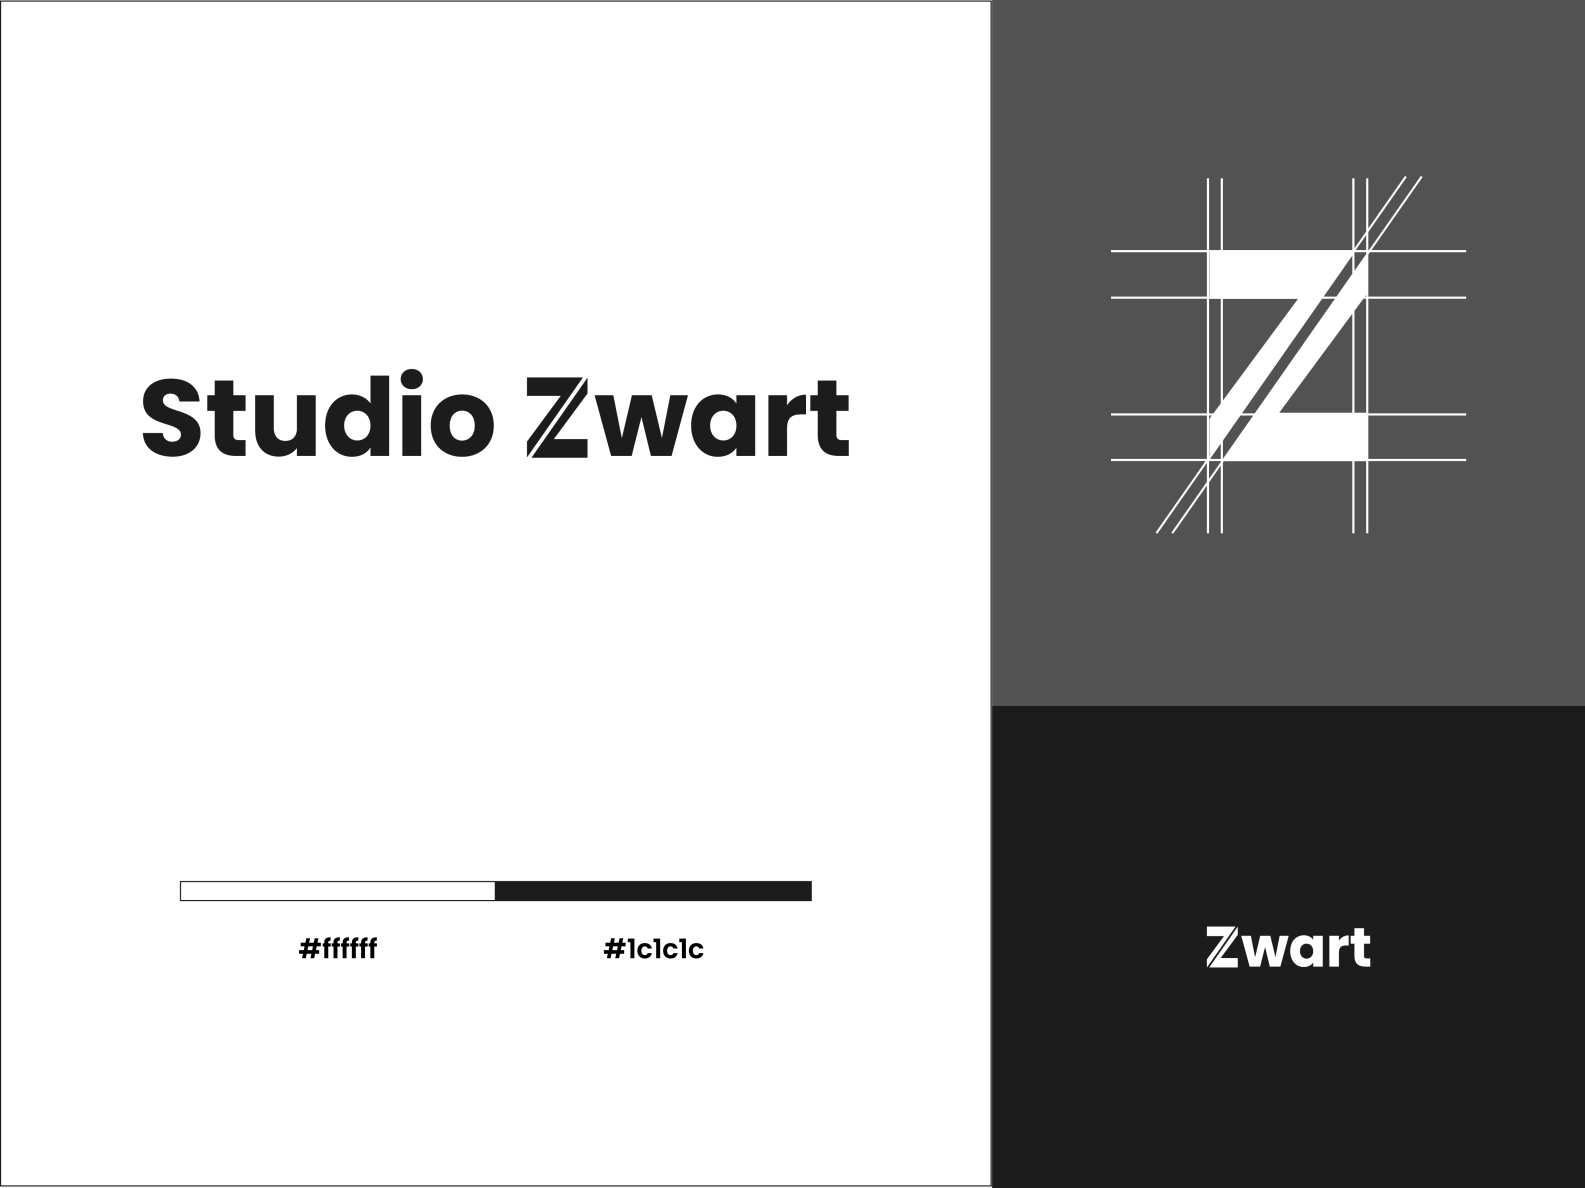 Studio Zwart | Design agency logo branding by Studio Zwart on Dribbble